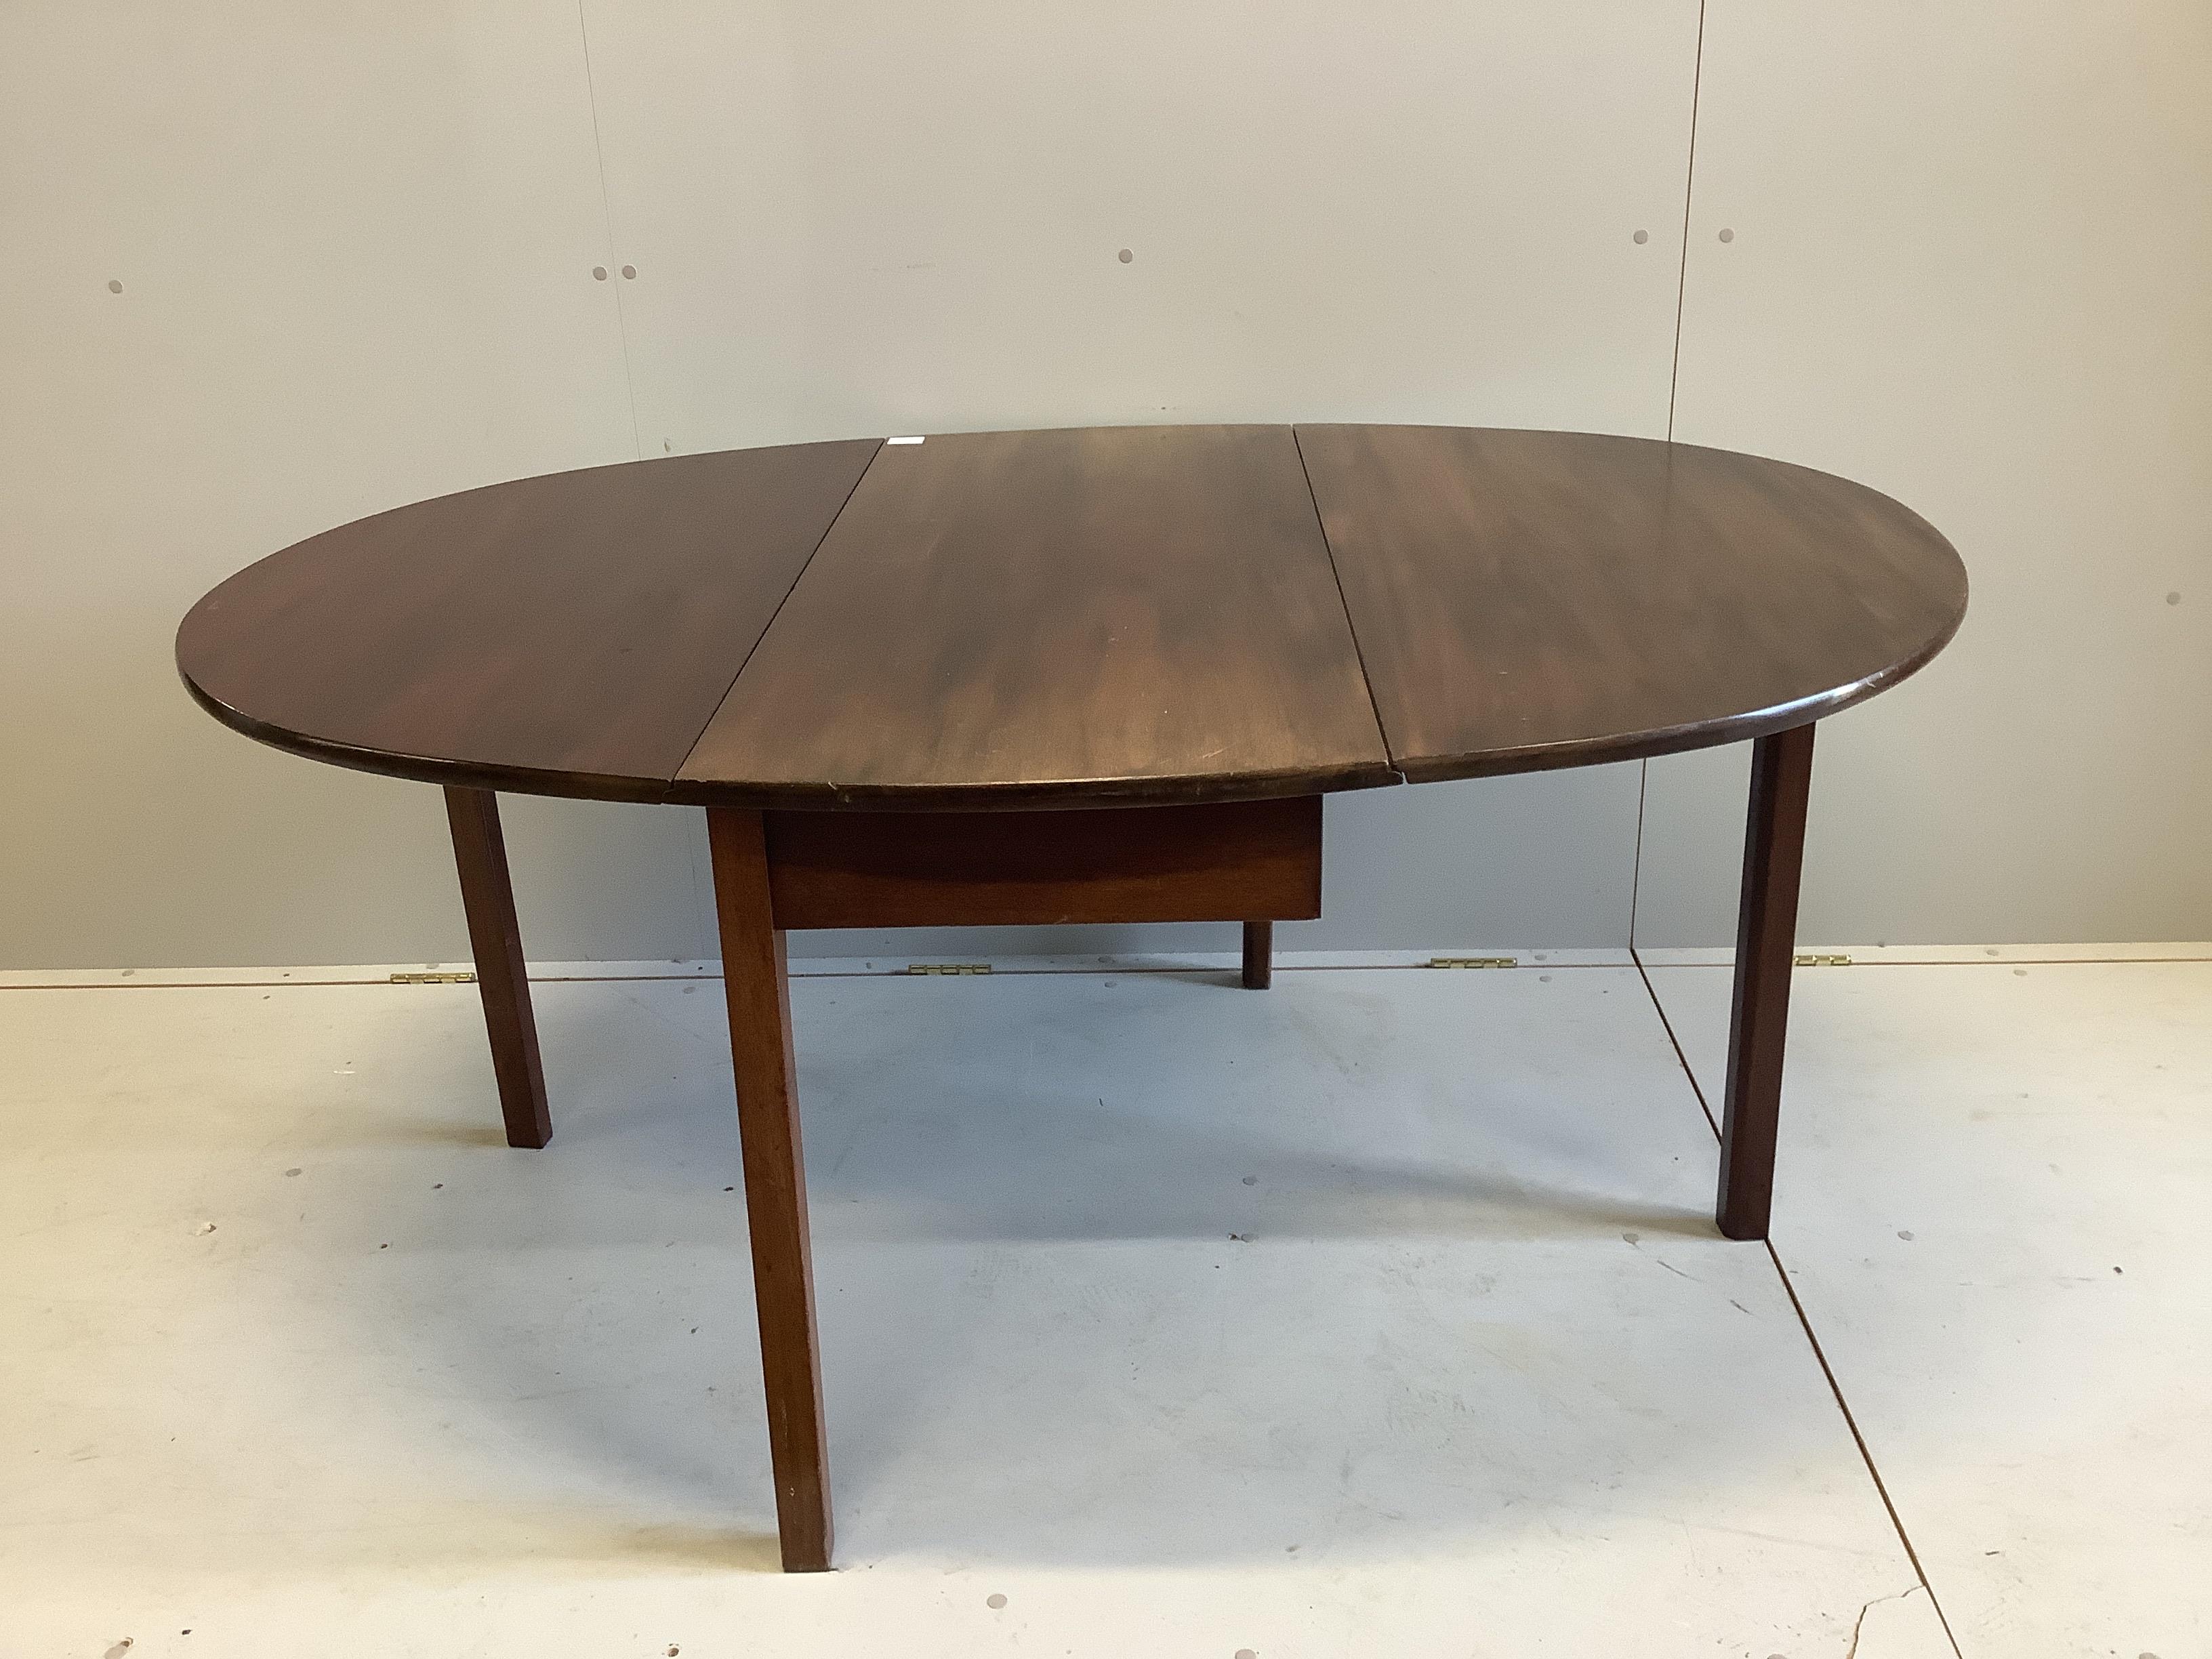 A George III mahogany drop leaf dining table, width 115cm, depth 50cm, height 70cm